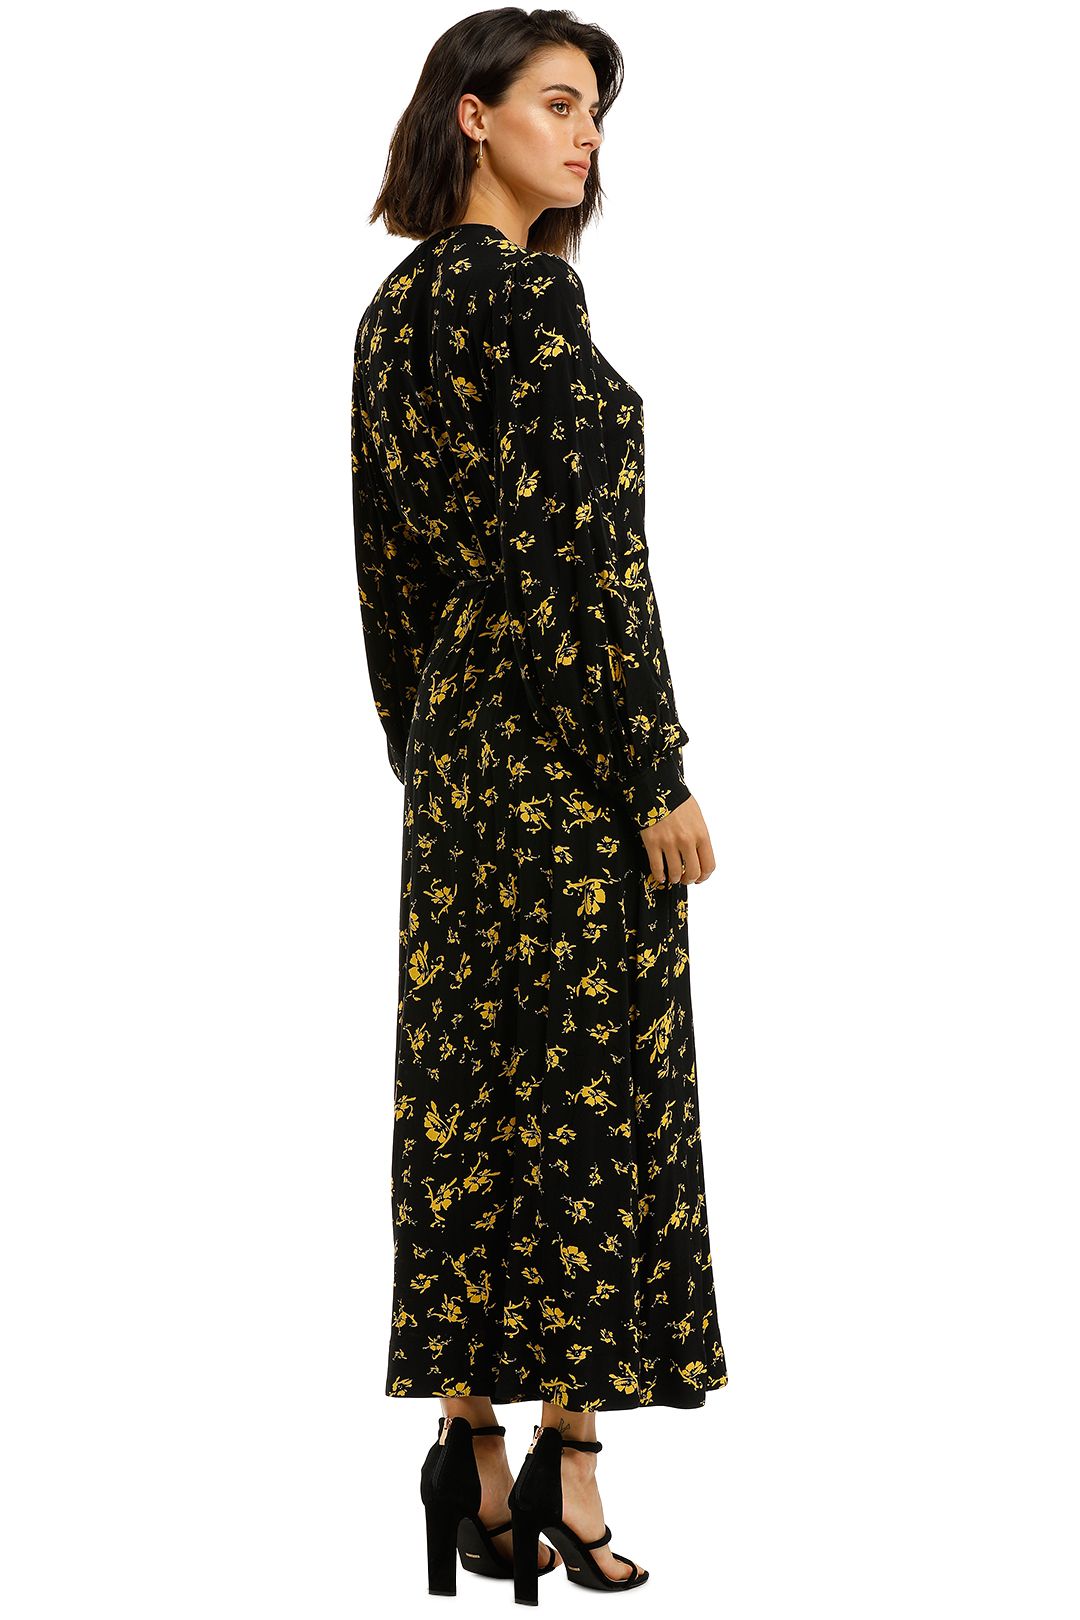 Ganni-Printed-Crepe-LS-Long-Dress-Black-Yellow-Back